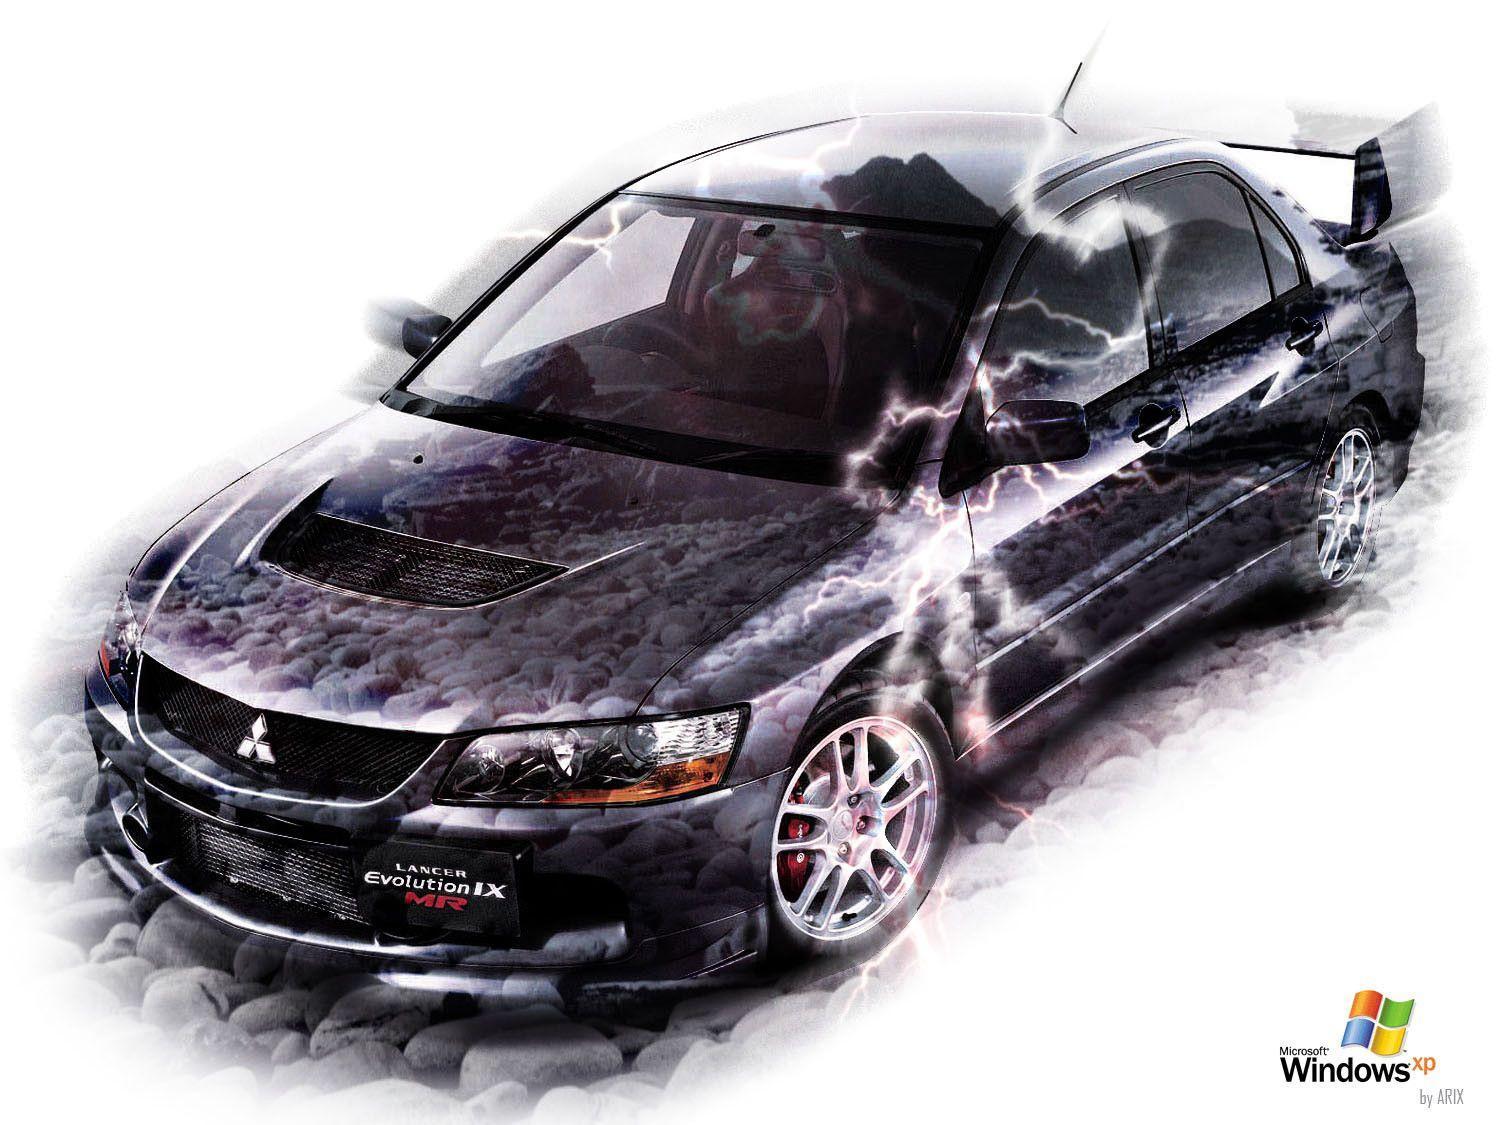 Mitsubishi Lancer Evo 9 HD Wallpaper Car Picture